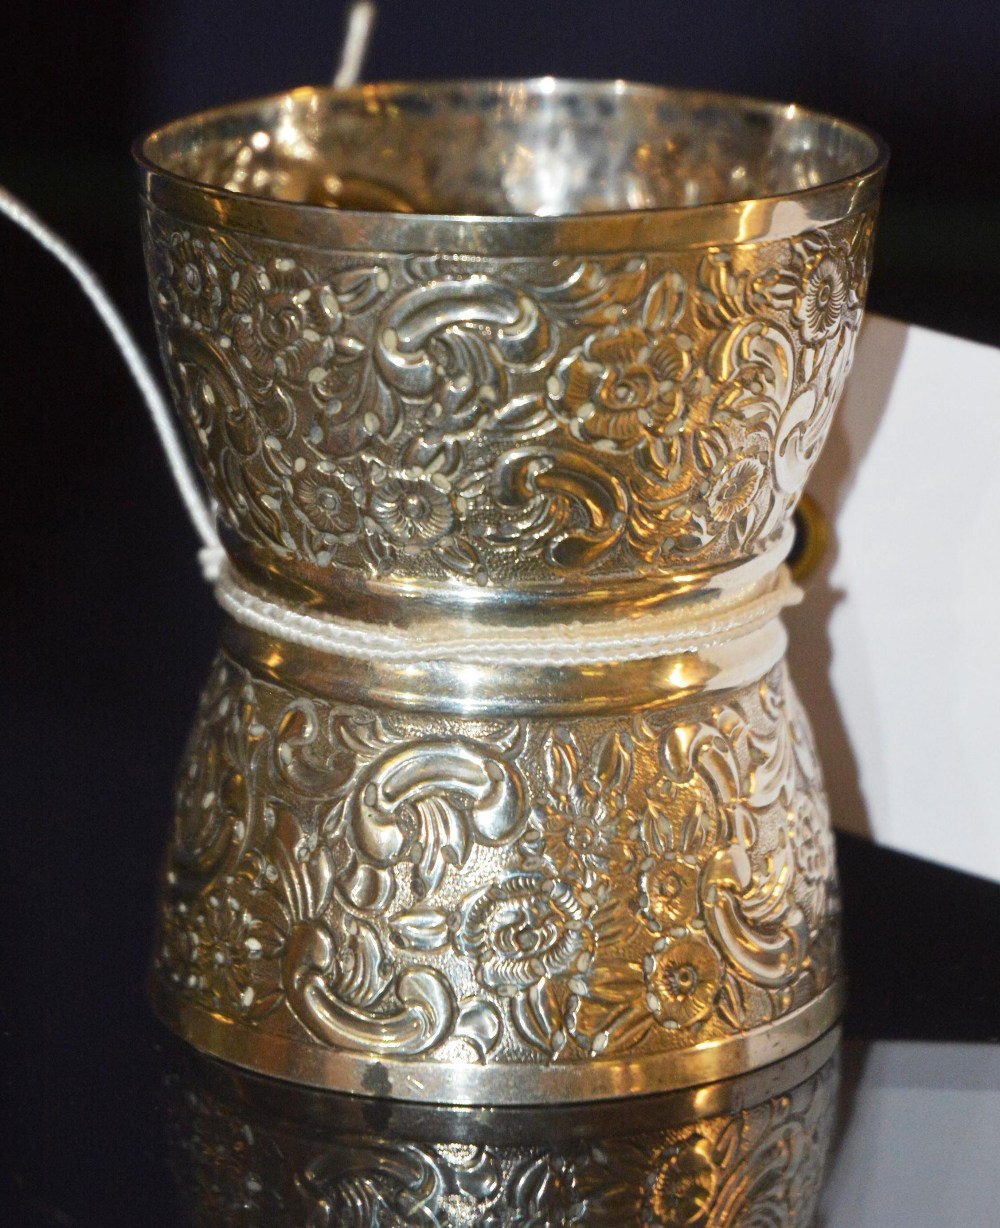 A Victorian silver egg cup, Edinburgh 1890 by Hamilton & Inches,